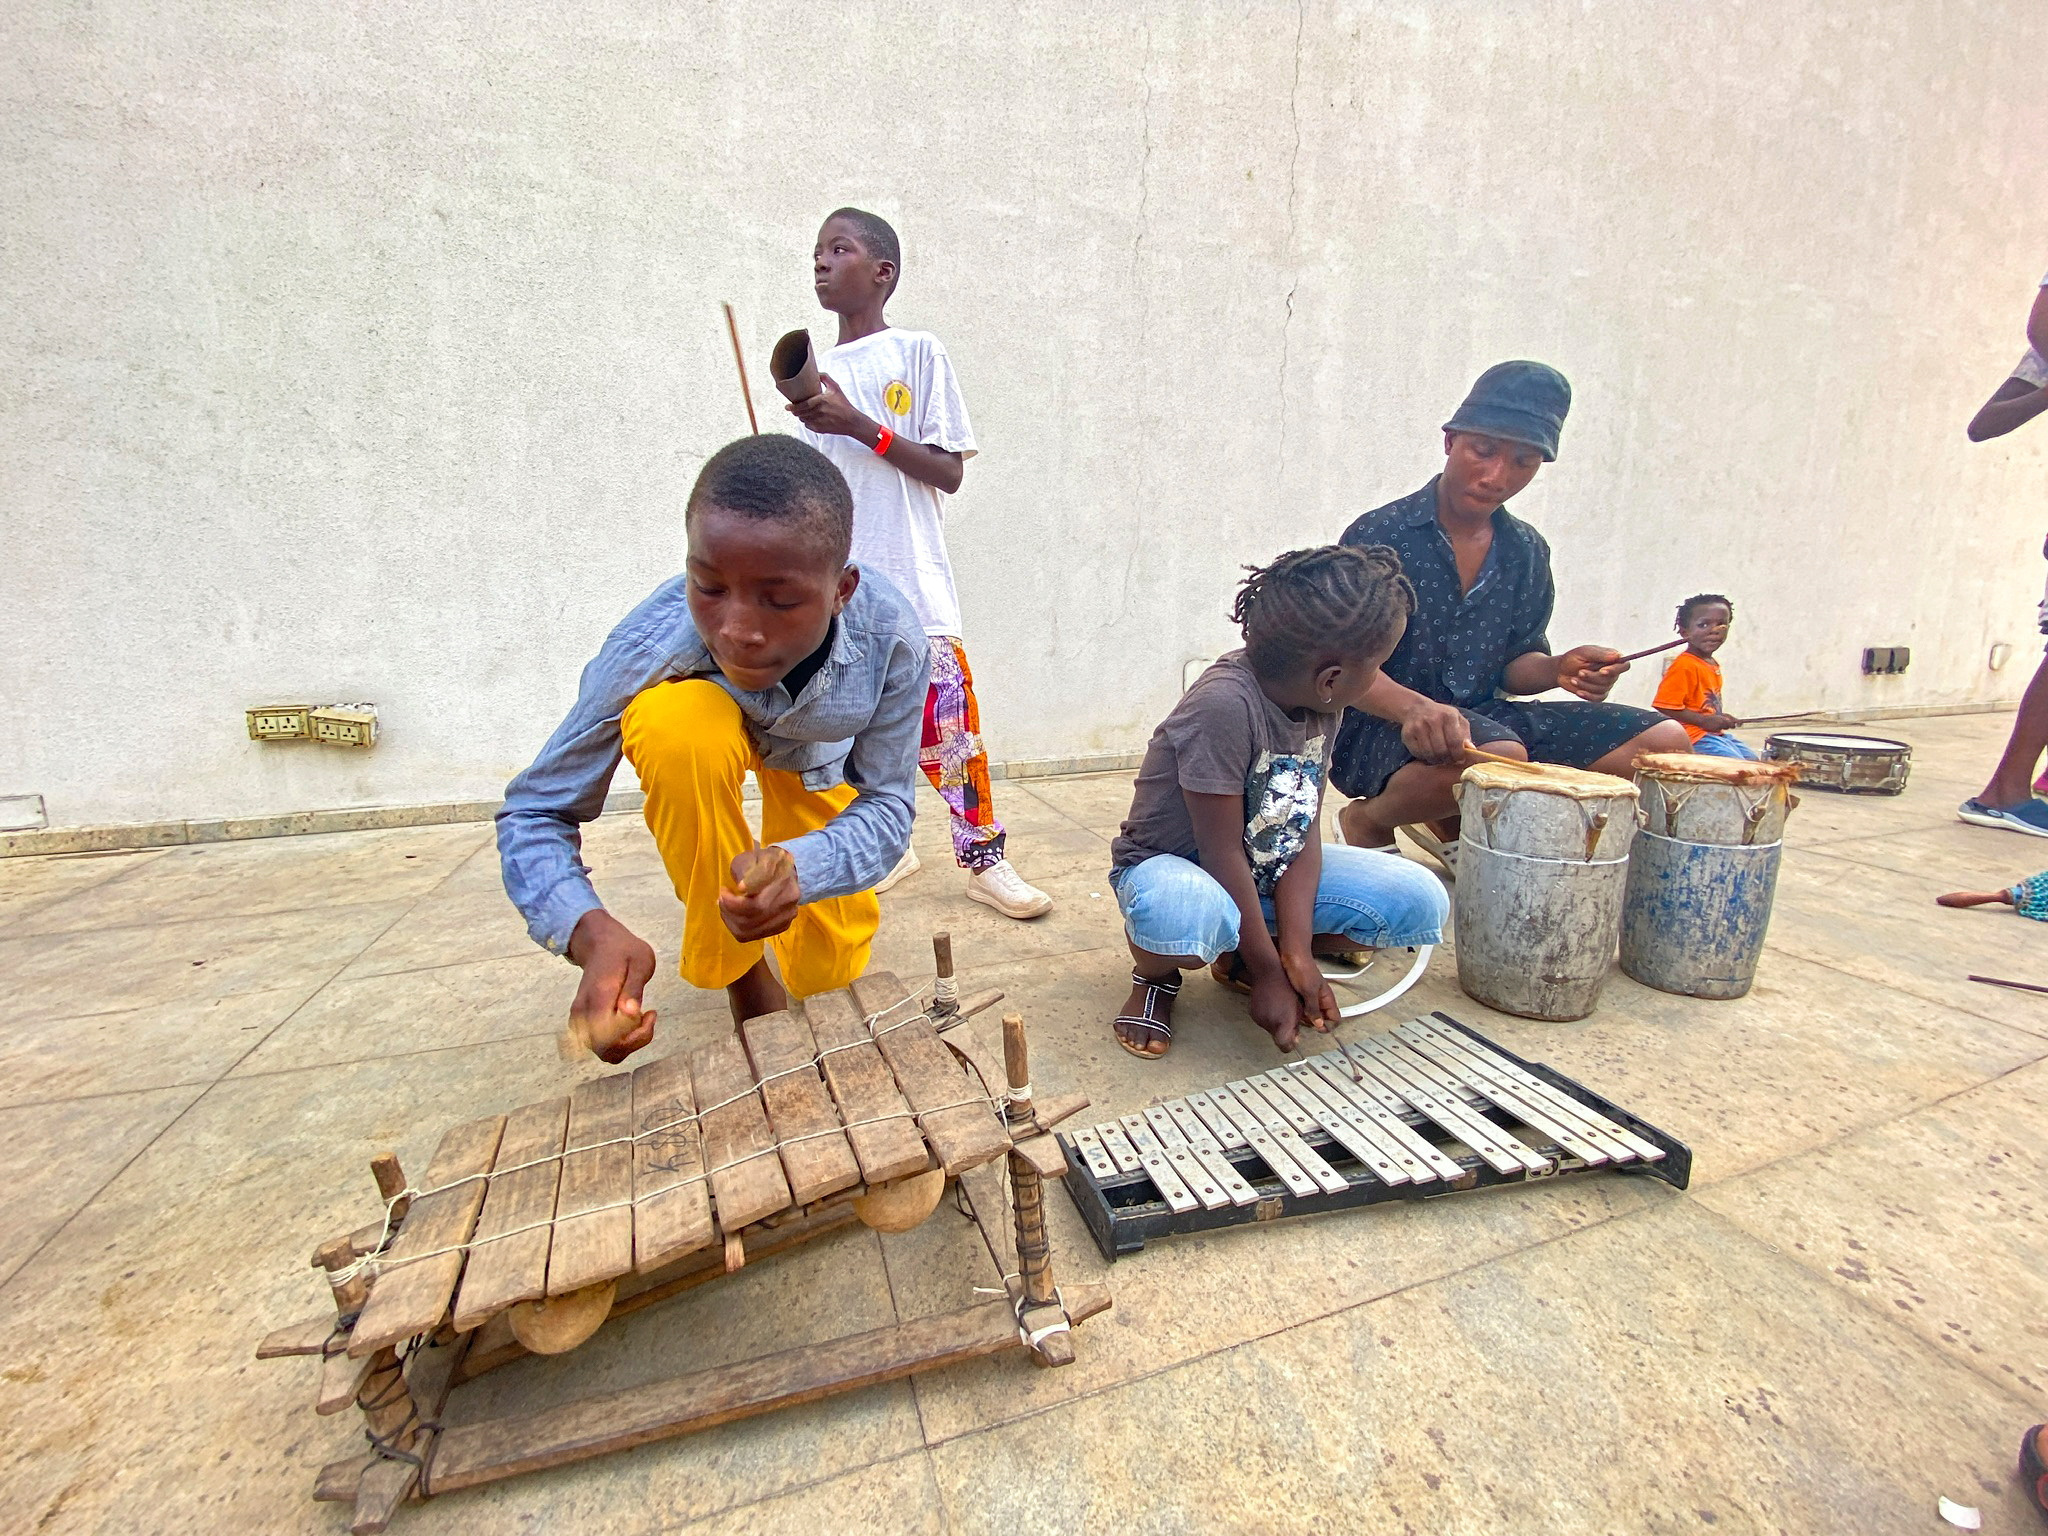 Children perform during a drumming workshop in Lagos